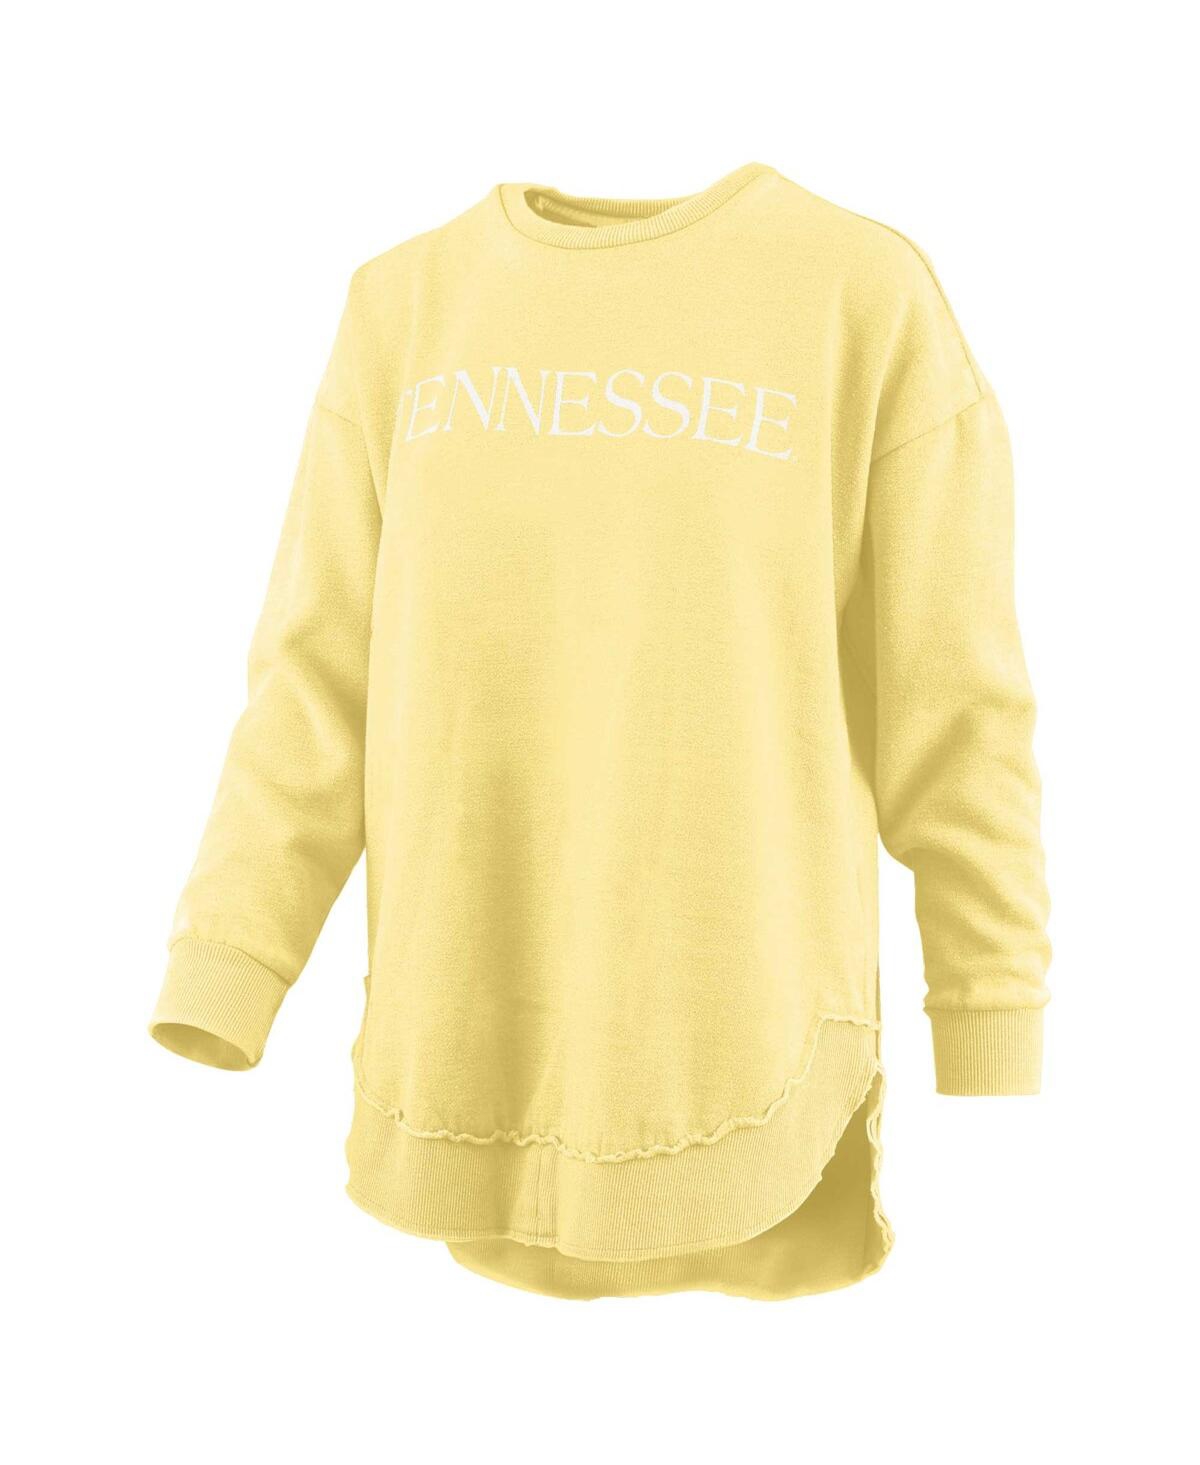 Shop Pressbox Women's Yellow Tennessee Volunteers Seaside Springtime Vintage-like Poncho Pullover Sweatshirt